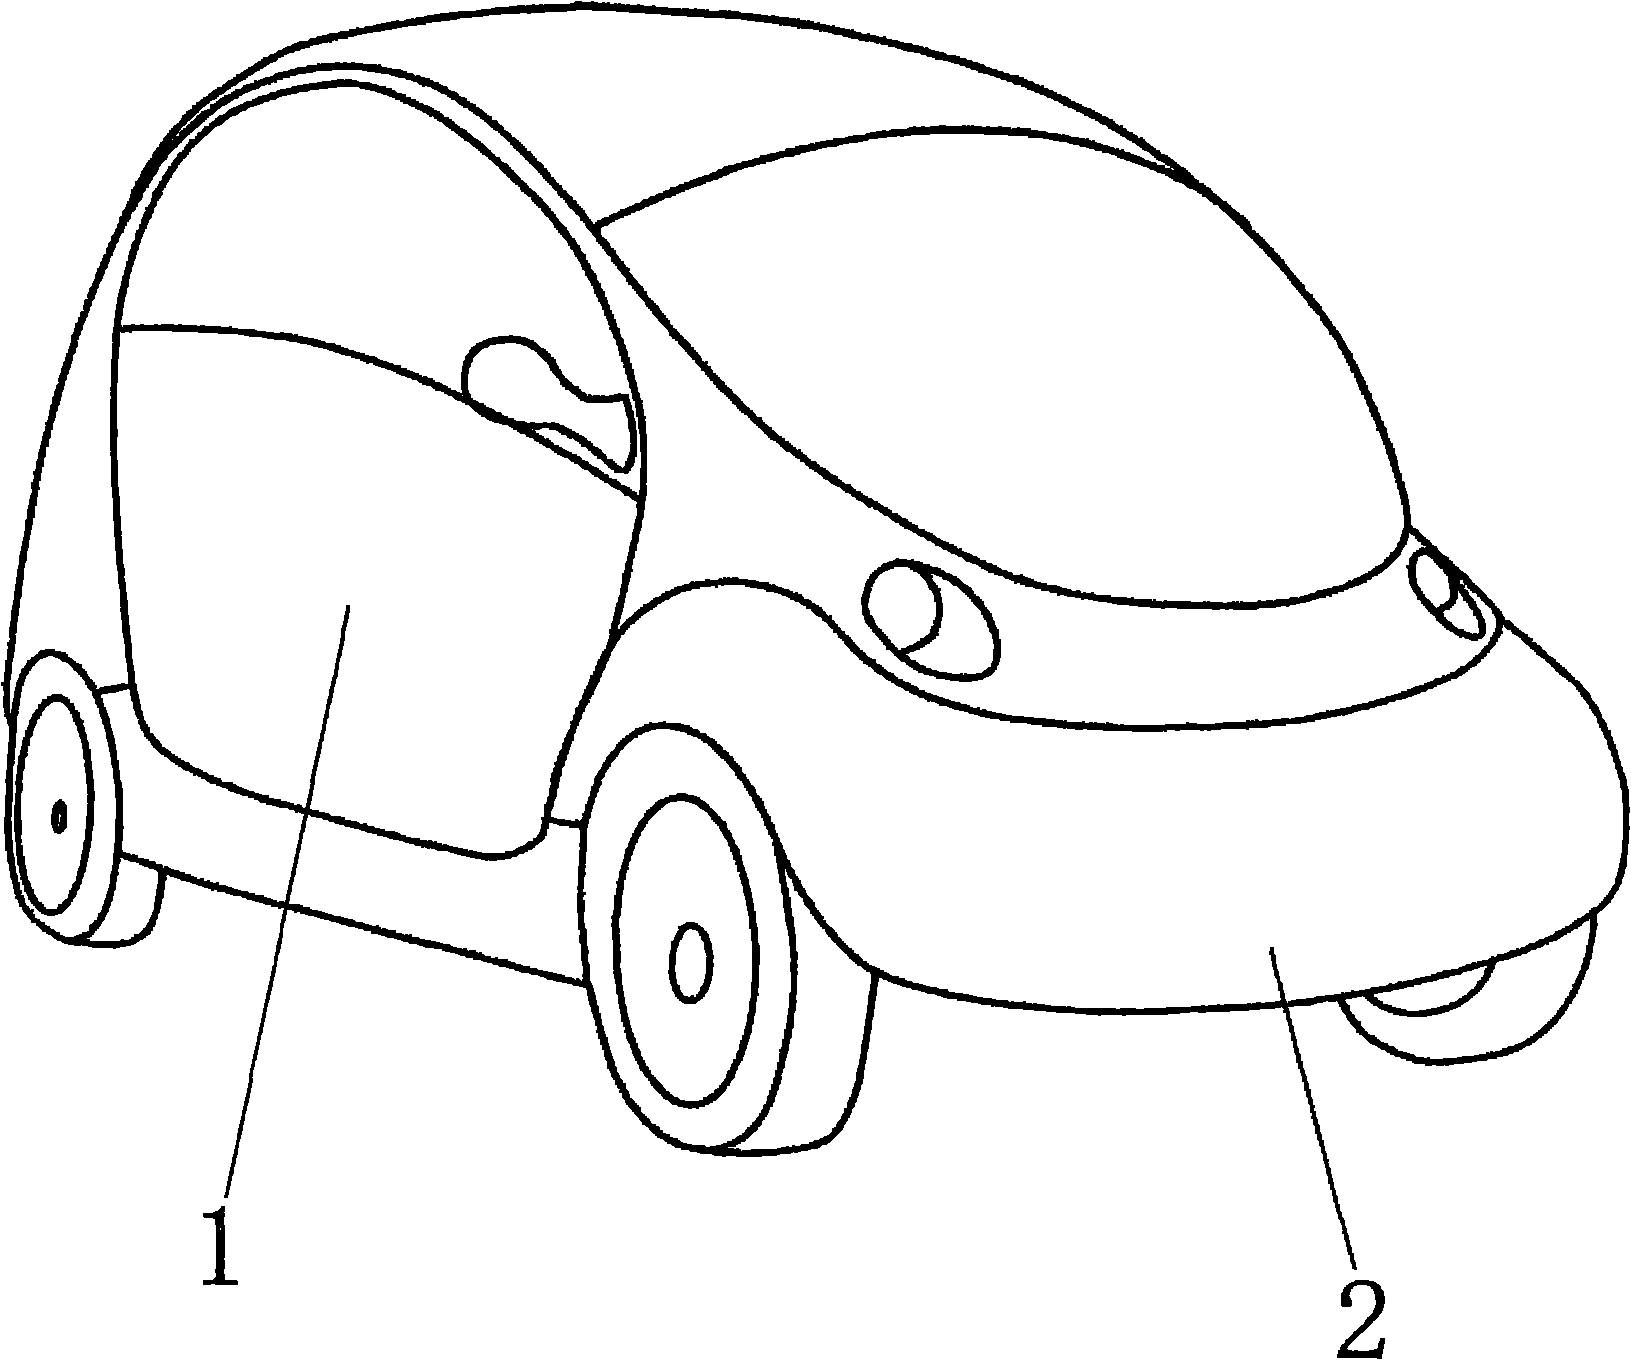 Small automobile capable of preventing collision